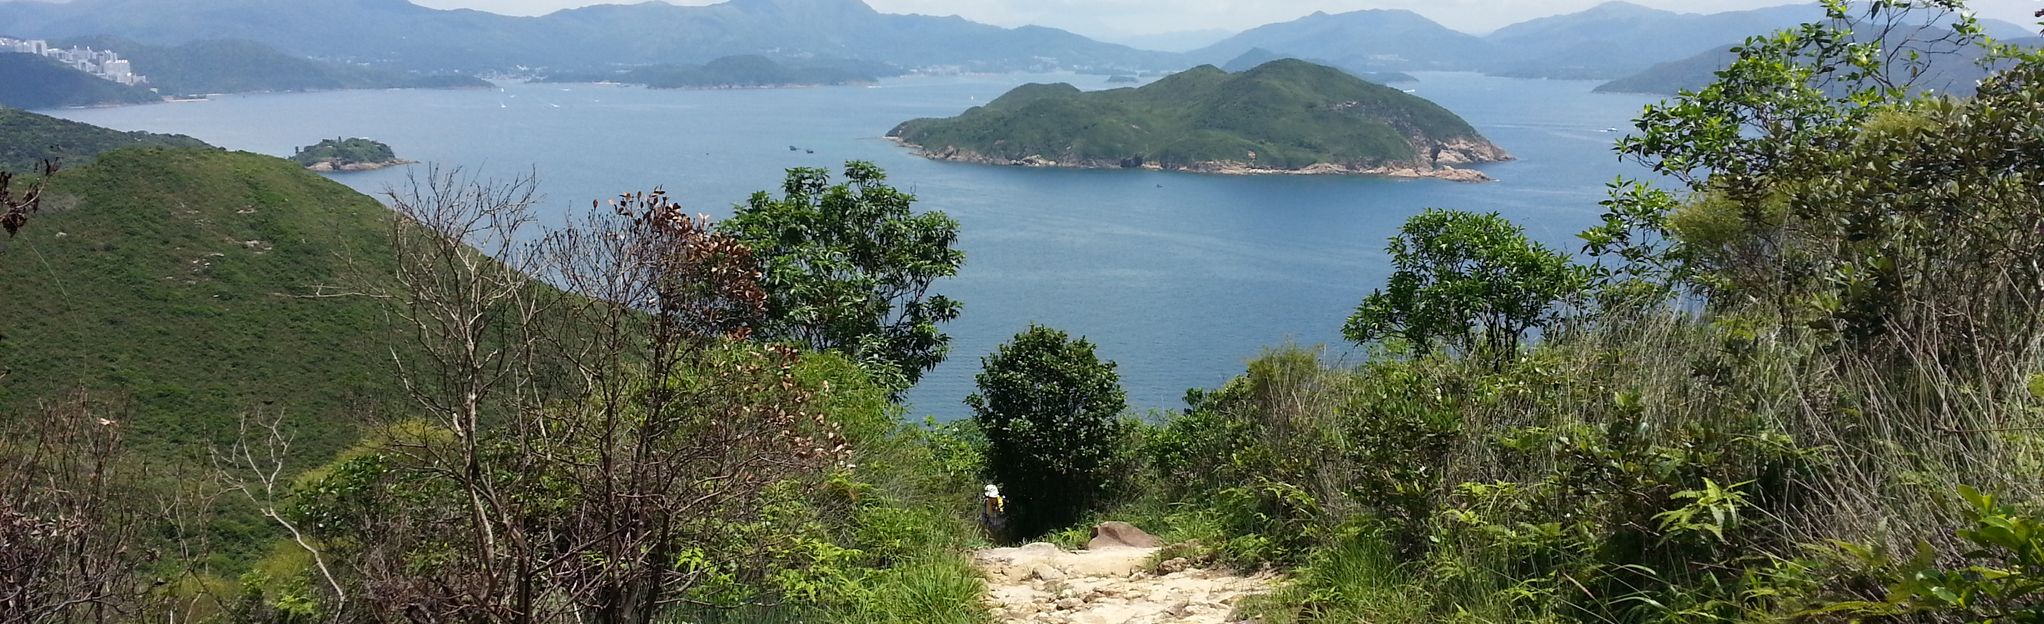 Lung Ha Wan Loop, Clearwater Bay Country Park, Clearwater Bay, Sai Kung, Hong Kong | AllTrails.com